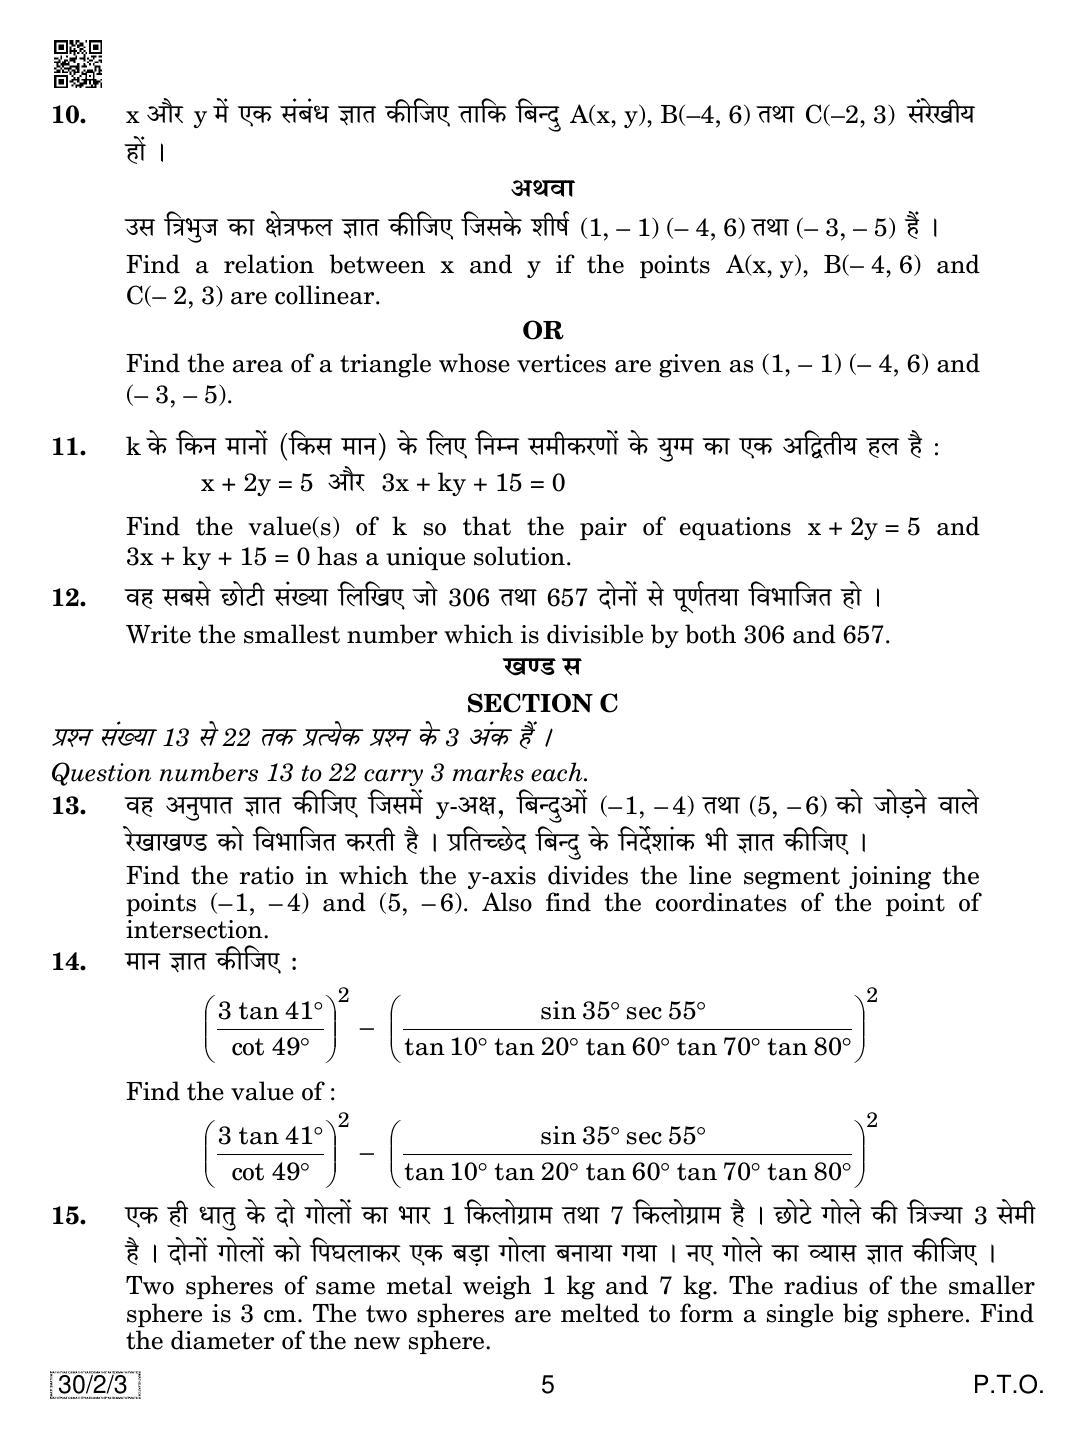 CBSE Class 10 Maths (30/2/3 - SET 3) 2019 Question Paper - Page 5